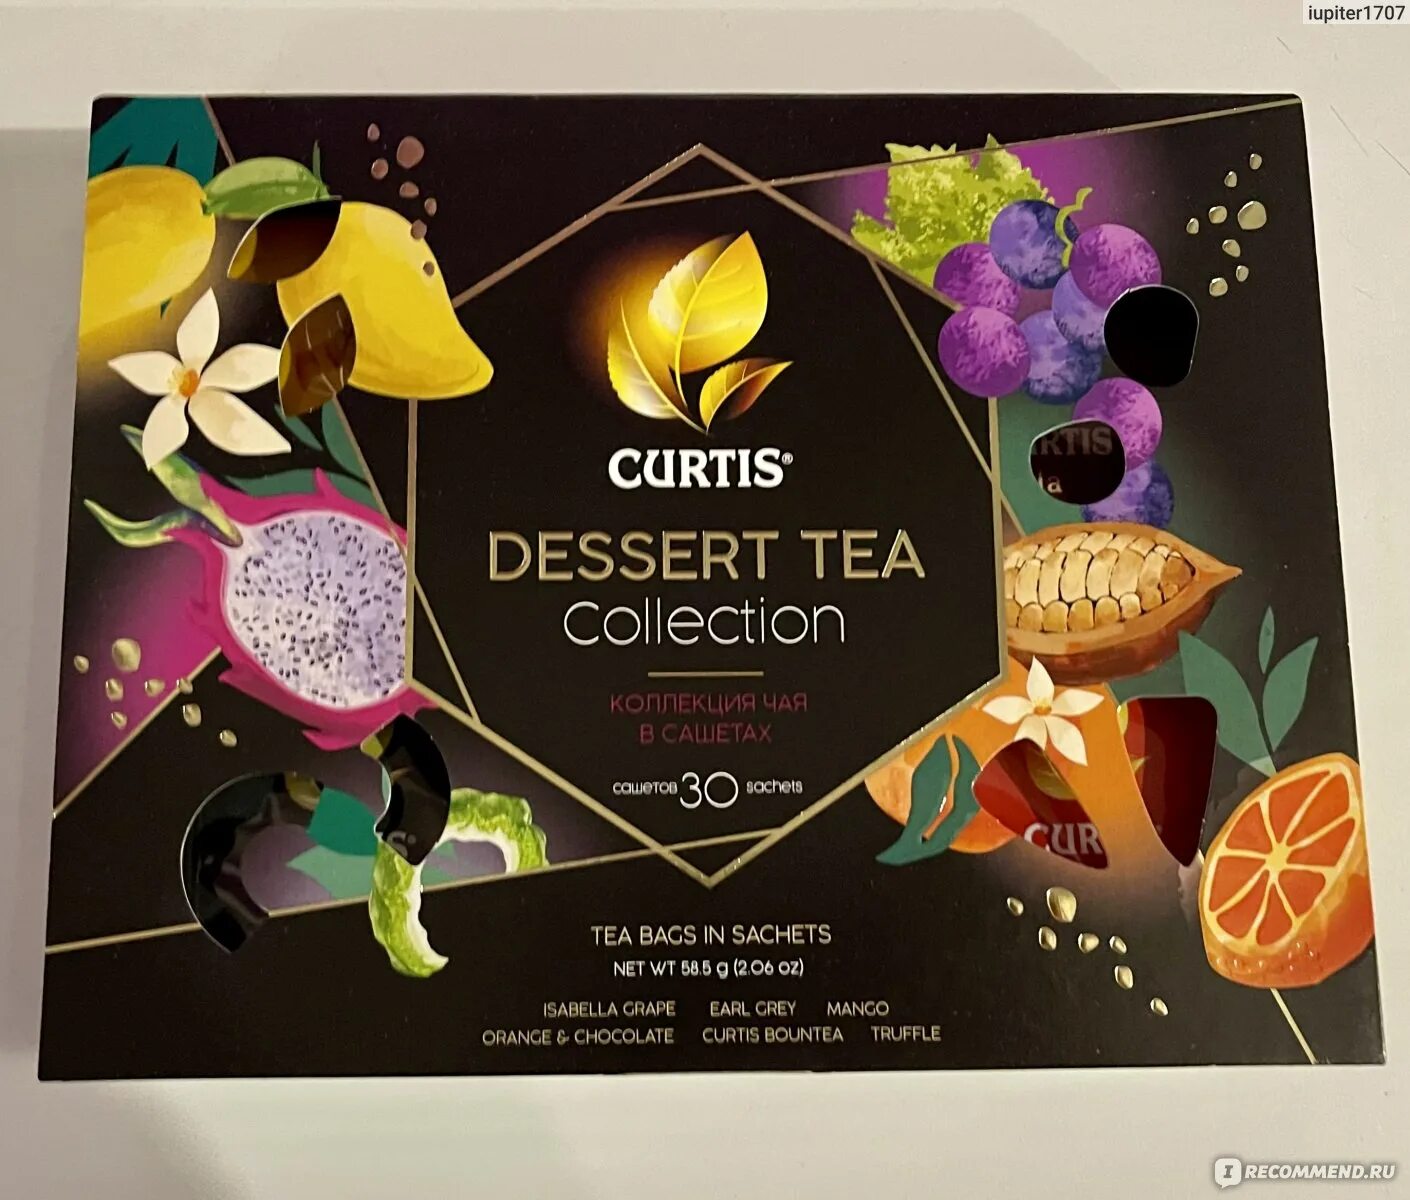 Curtis dessert collection. Чай Curtis Dessert Tea collection. Кёртис набор (пак) 30*1,5г dissert Tea collection.